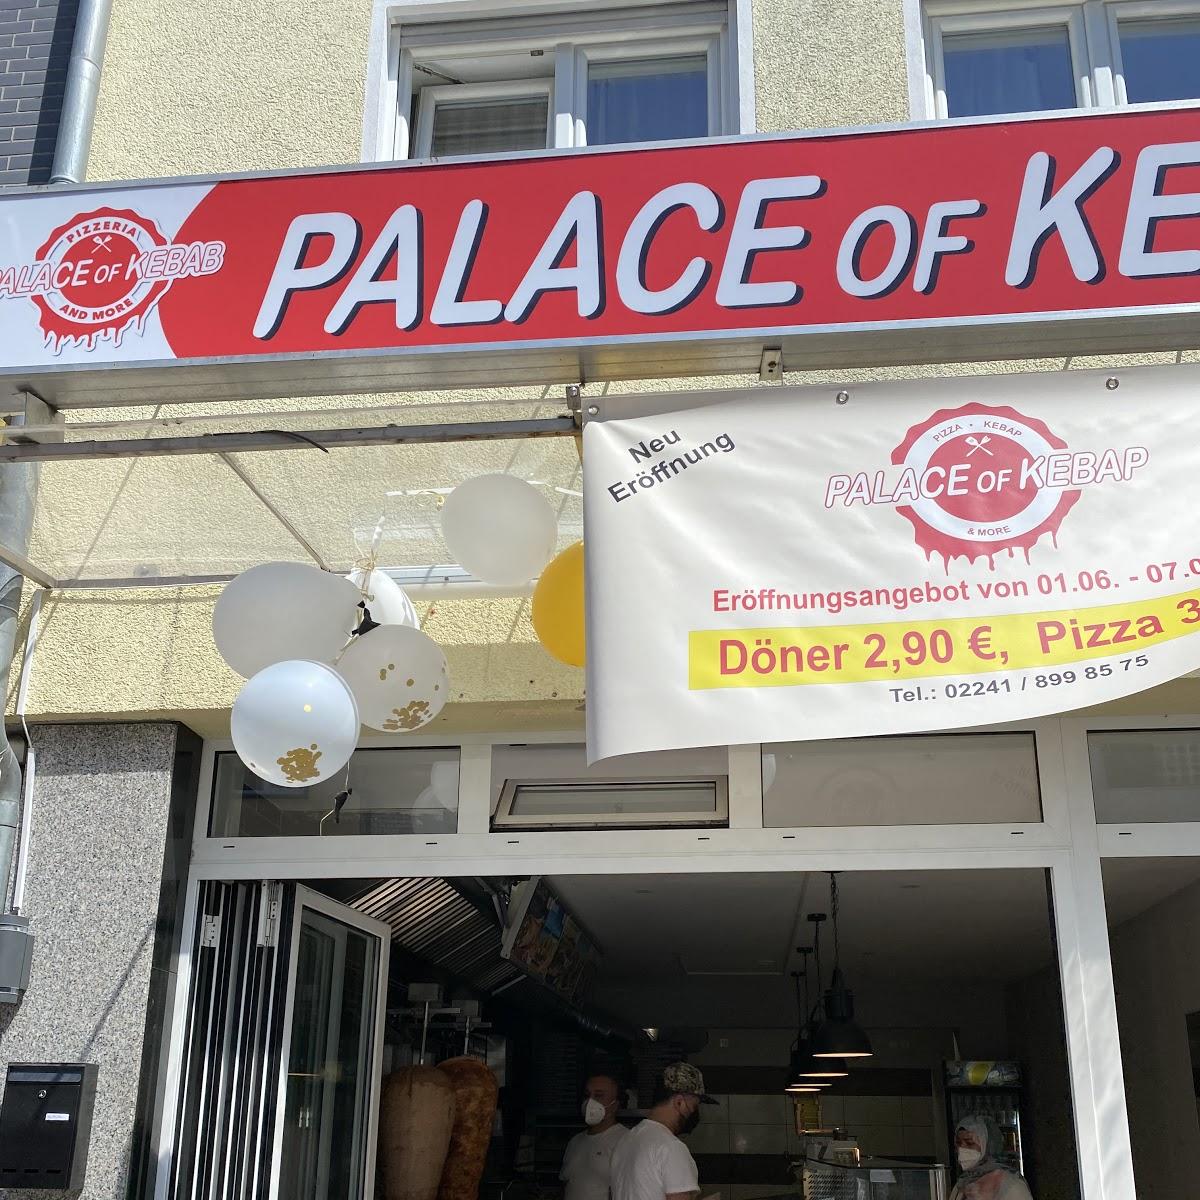 Restaurant "Palace of Kebab" in Troisdorf